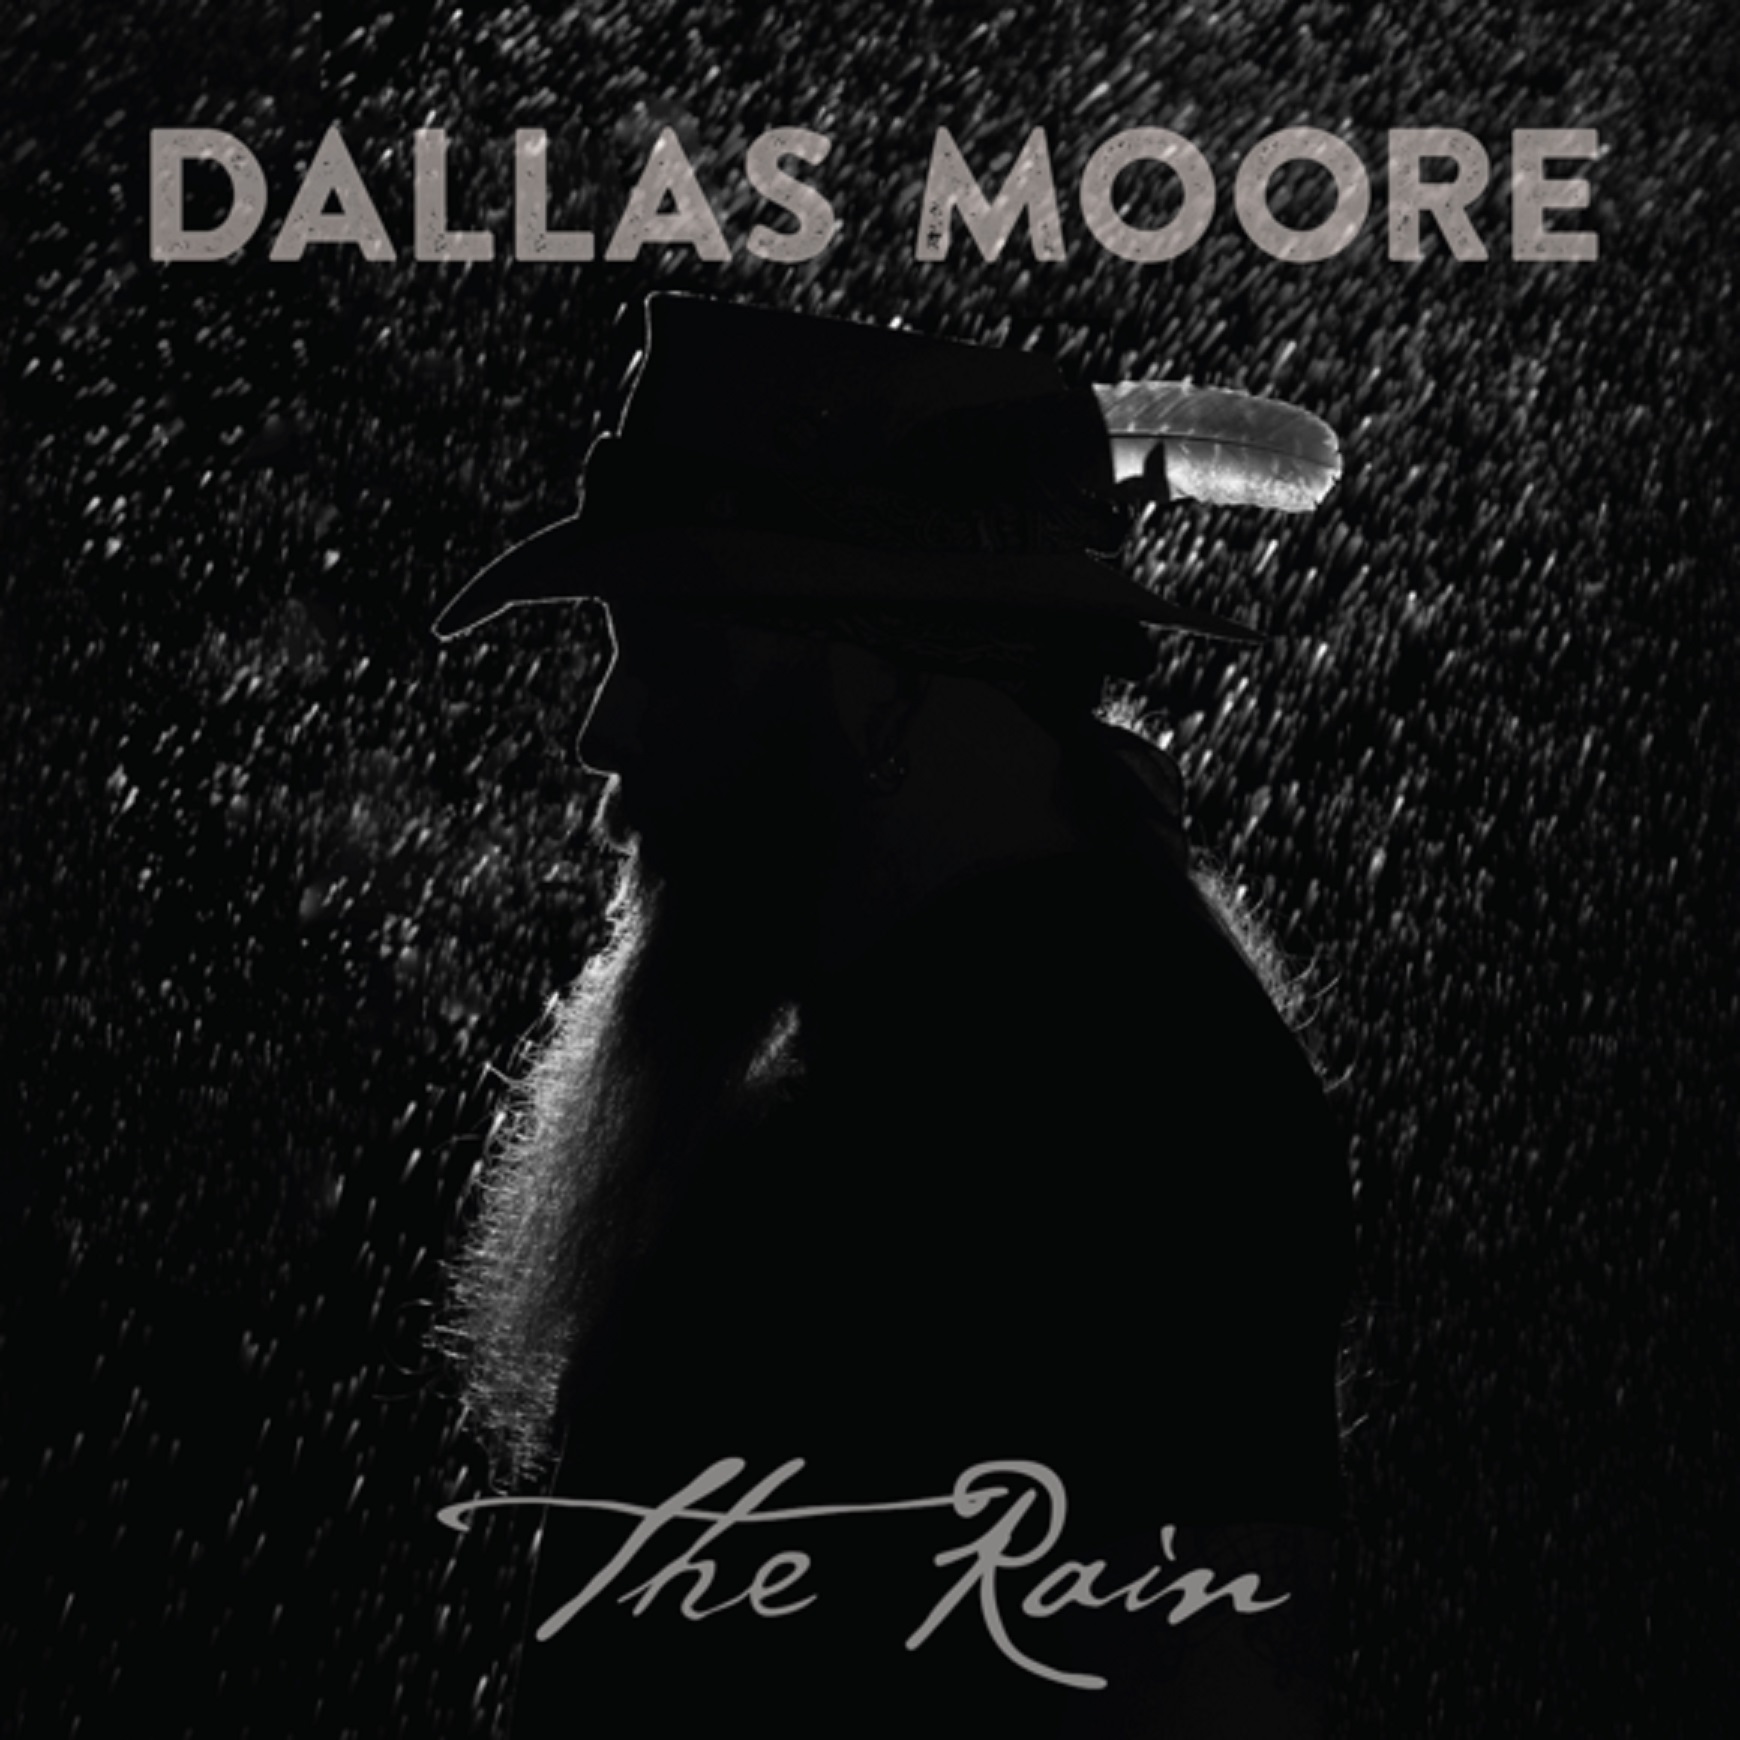 Dallas Moore's new LP The Rain is due out April 9